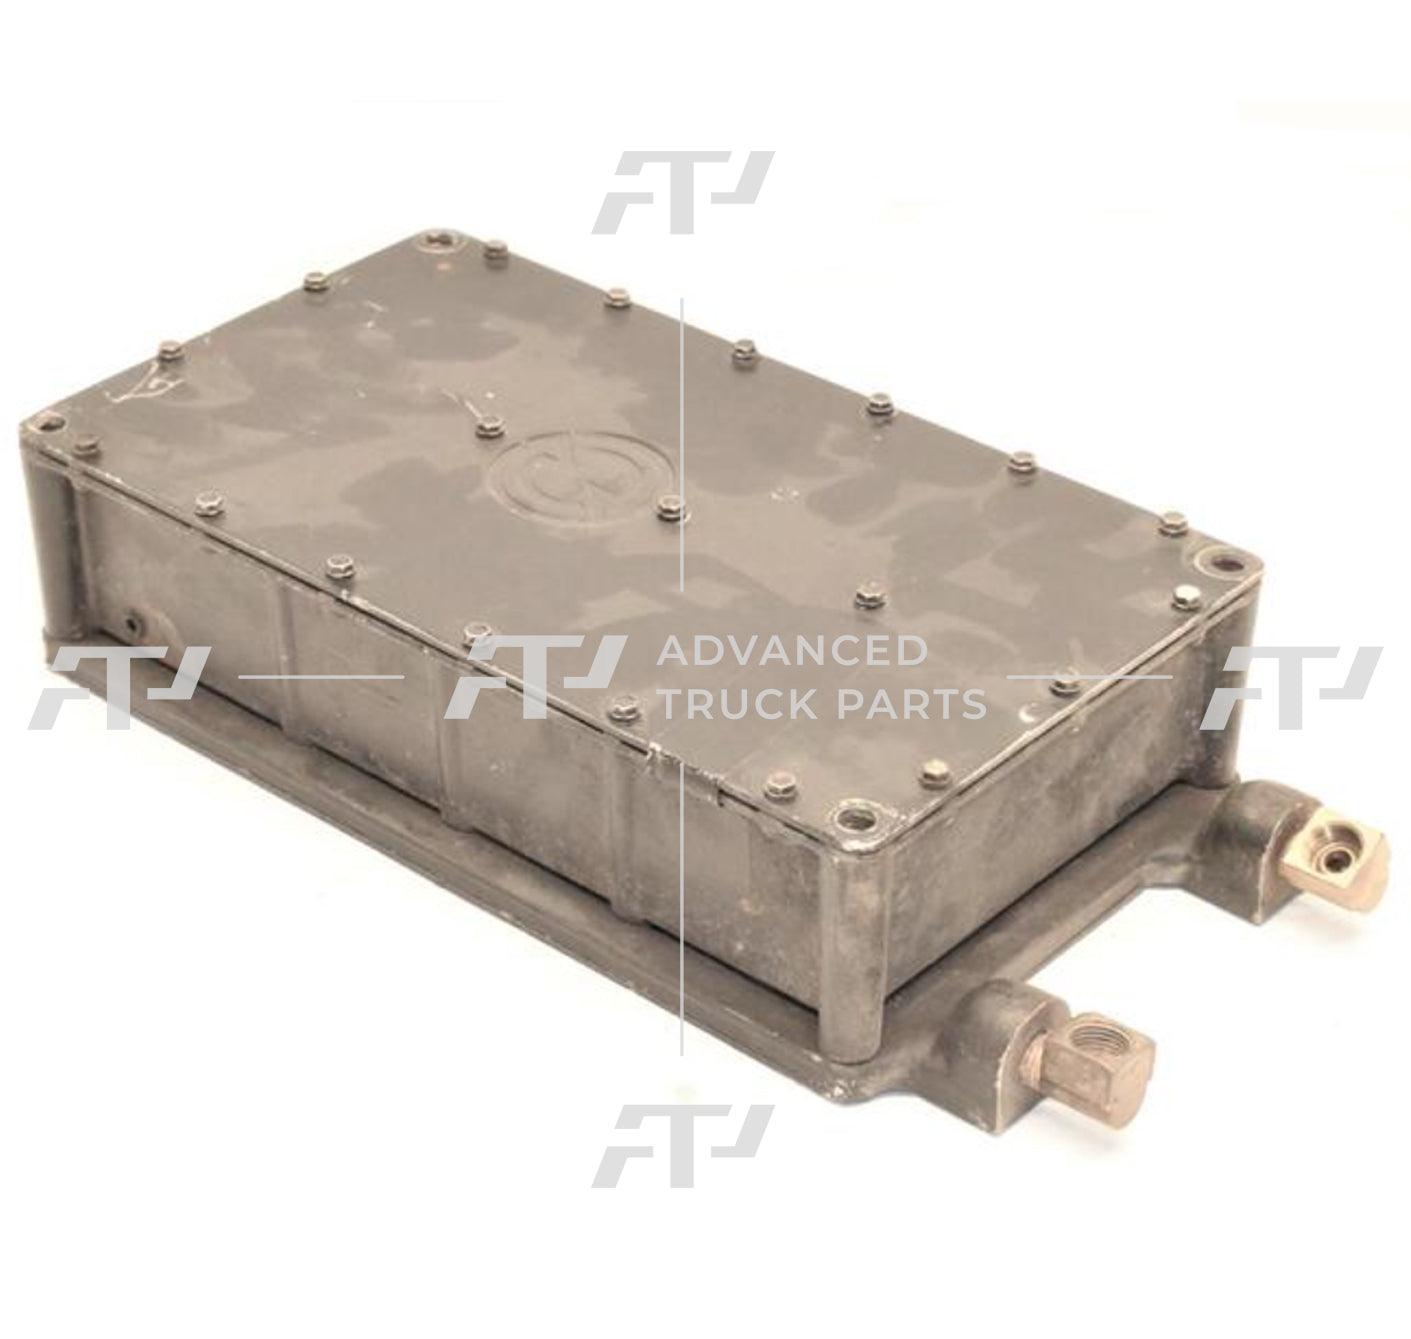 16032426 Oem Allison Cooler Plate Edu Transmission Control Module For Detroit Diesel - ADVANCED TRUCK PARTS